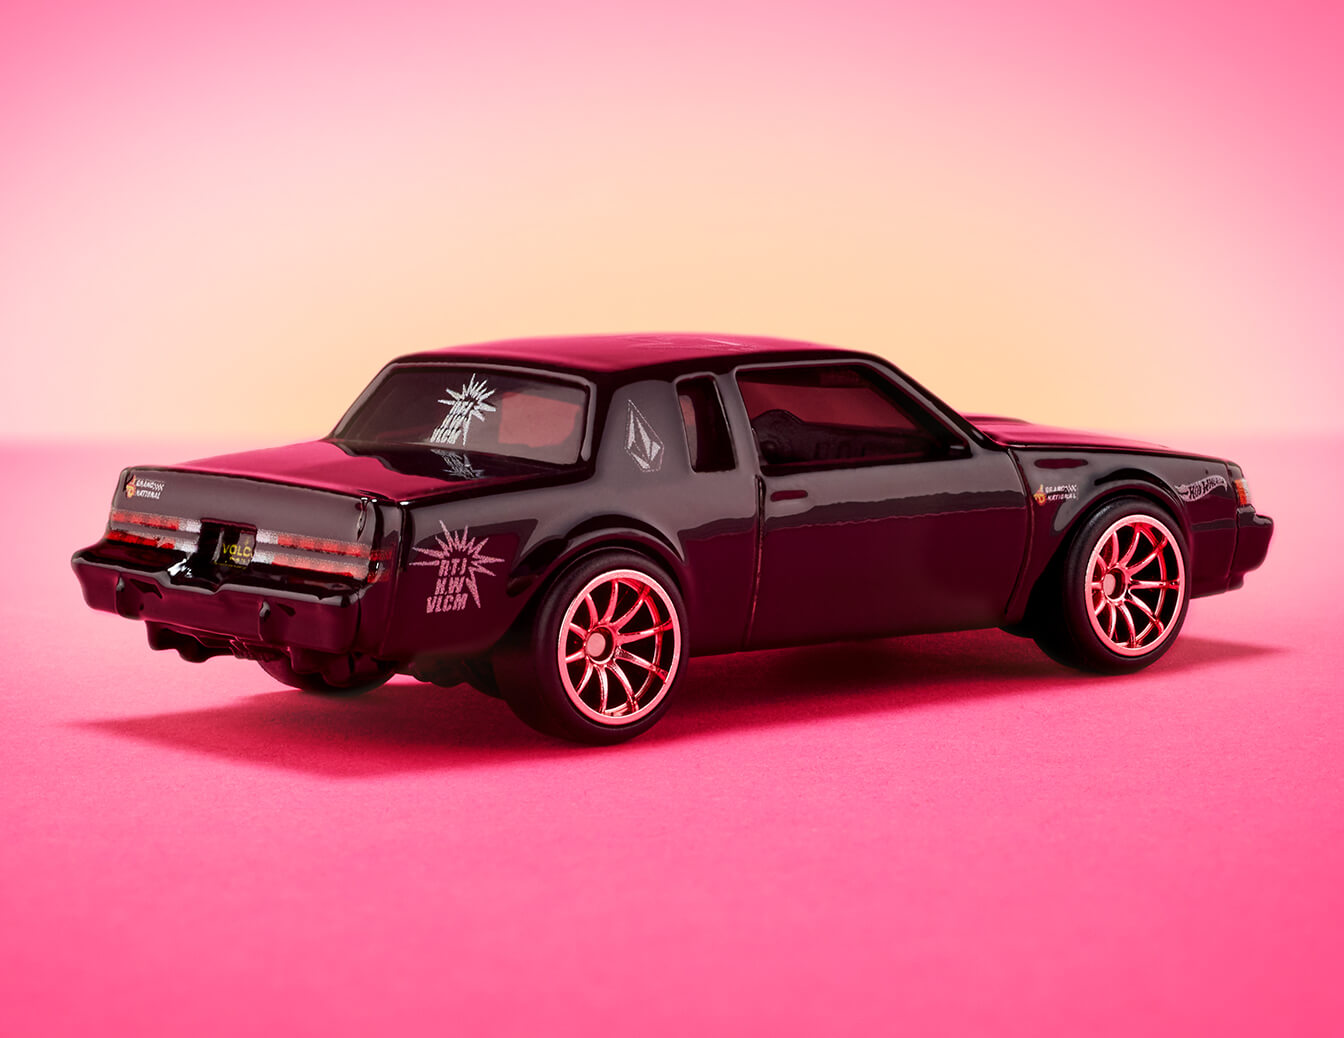 Hot Wheels Run The Jewels X Volcom | Mattel Creations